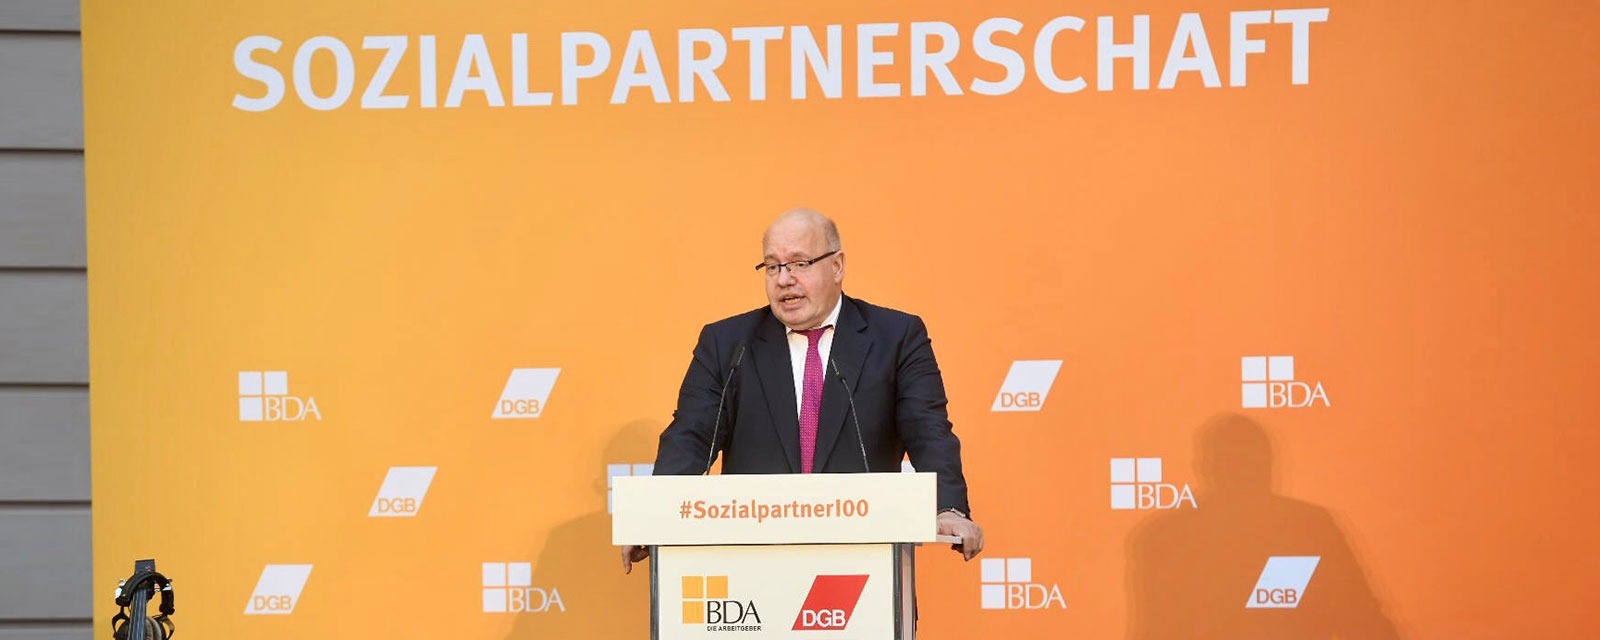 Bundesminister Peter Altmaier